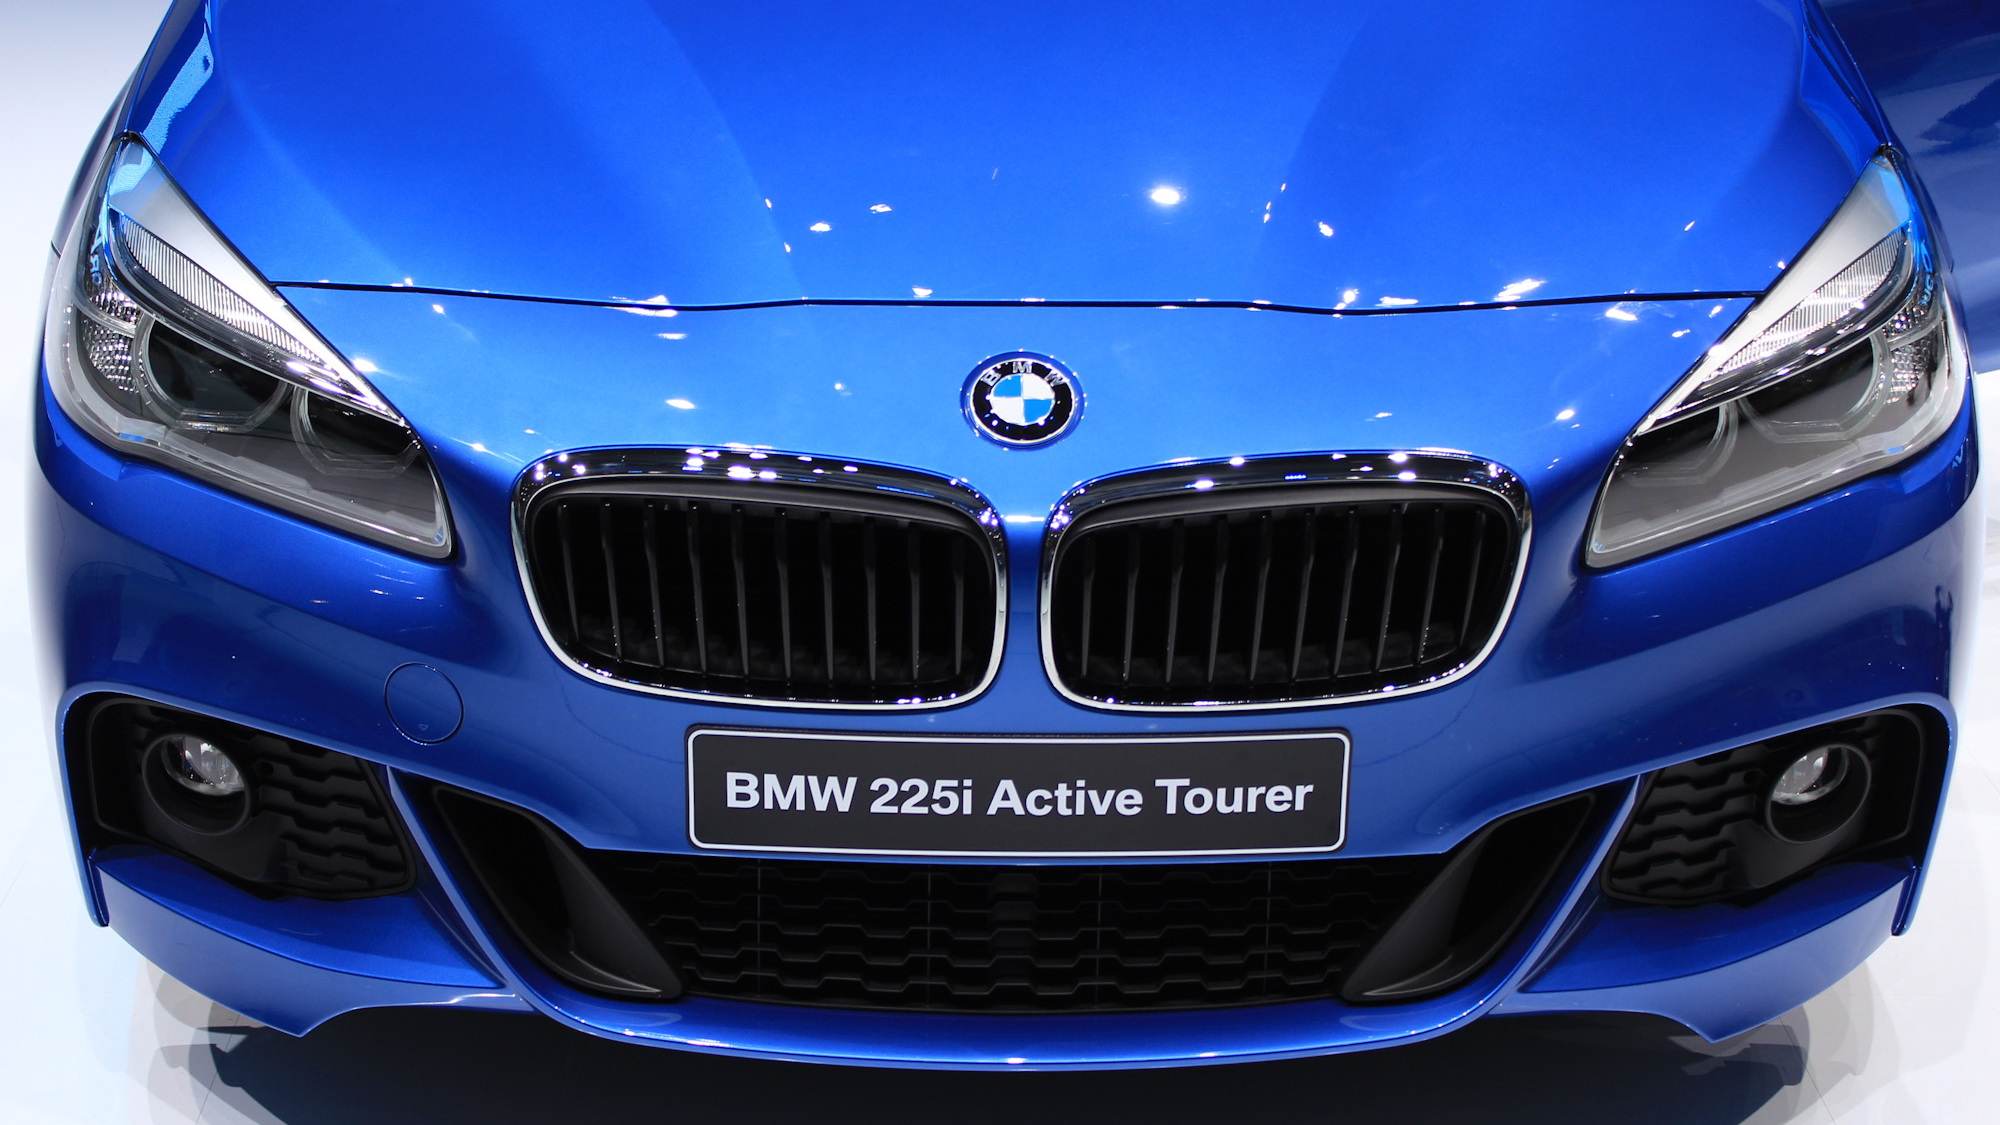 2014 BMW 2-Series Active Tourer: Live Photos From Geneva Show